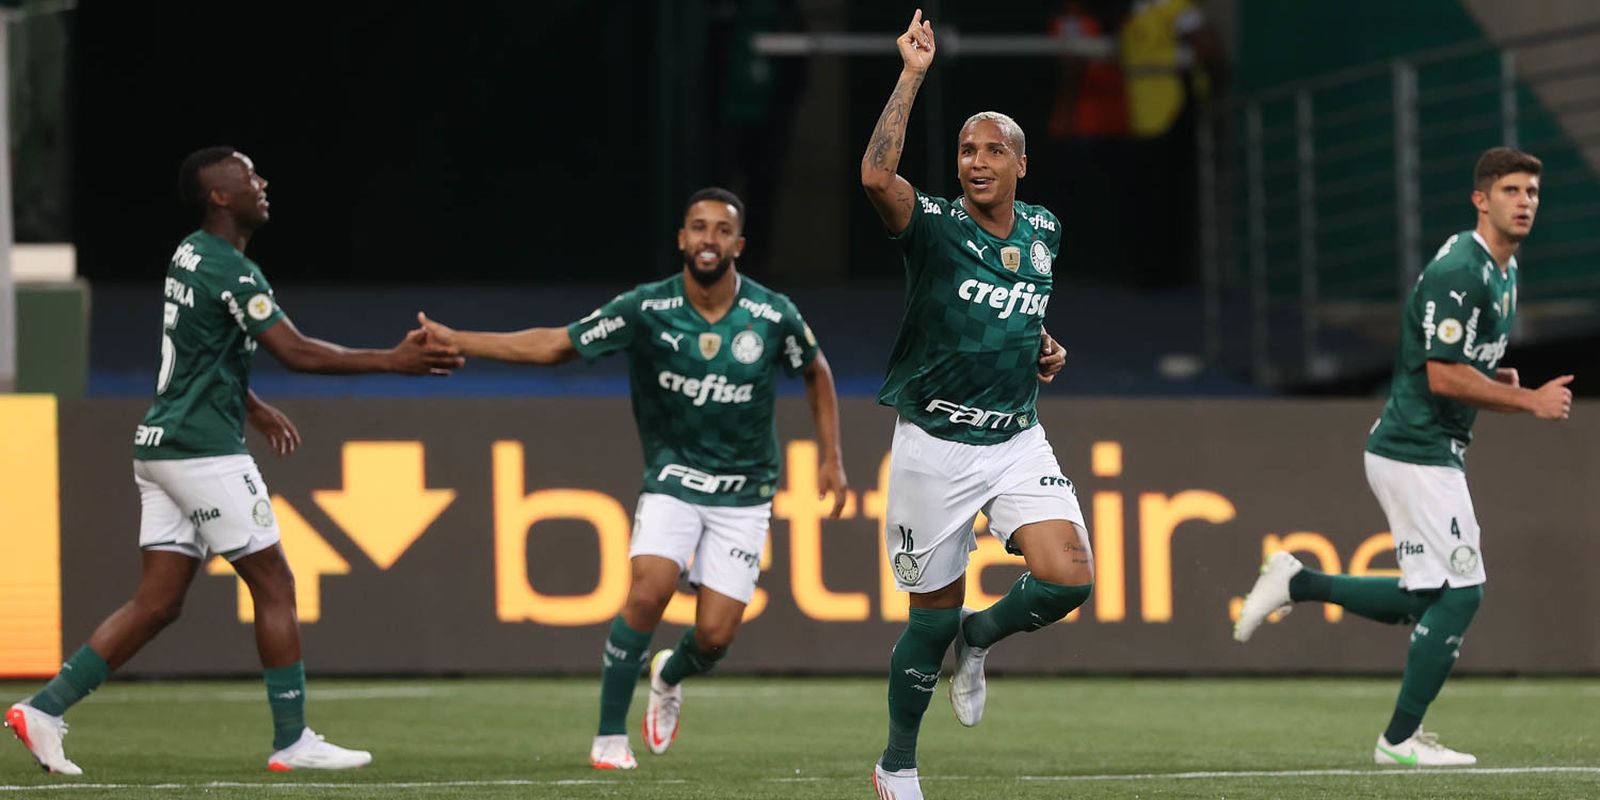 Mundial de Clubes: Chelsea é favorito ao título e Palmeiras aparece com 25%  de chances, aponta Betfair - Circuito de Notícias